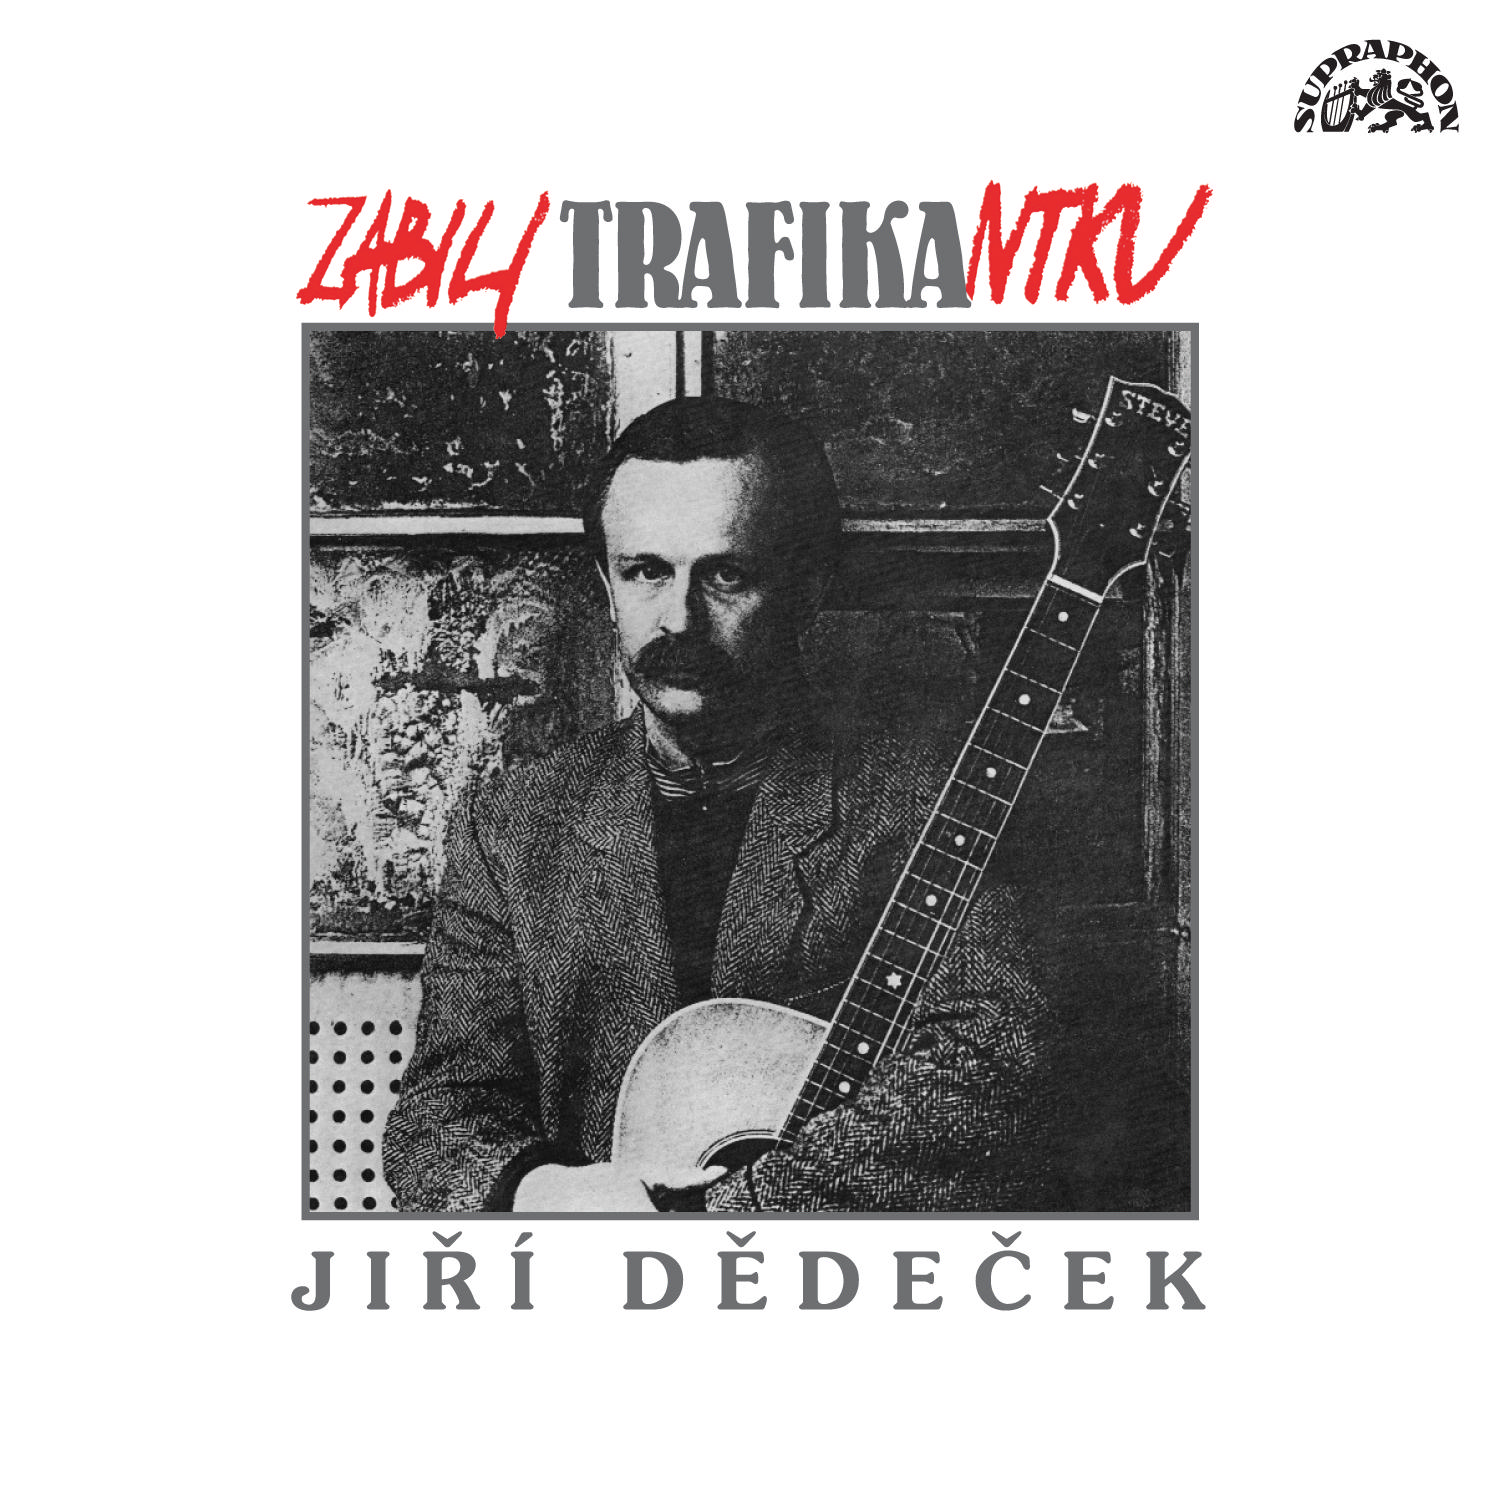 CD Shop - DEDECEK JIRI ZABILI TRAFIKANTKU